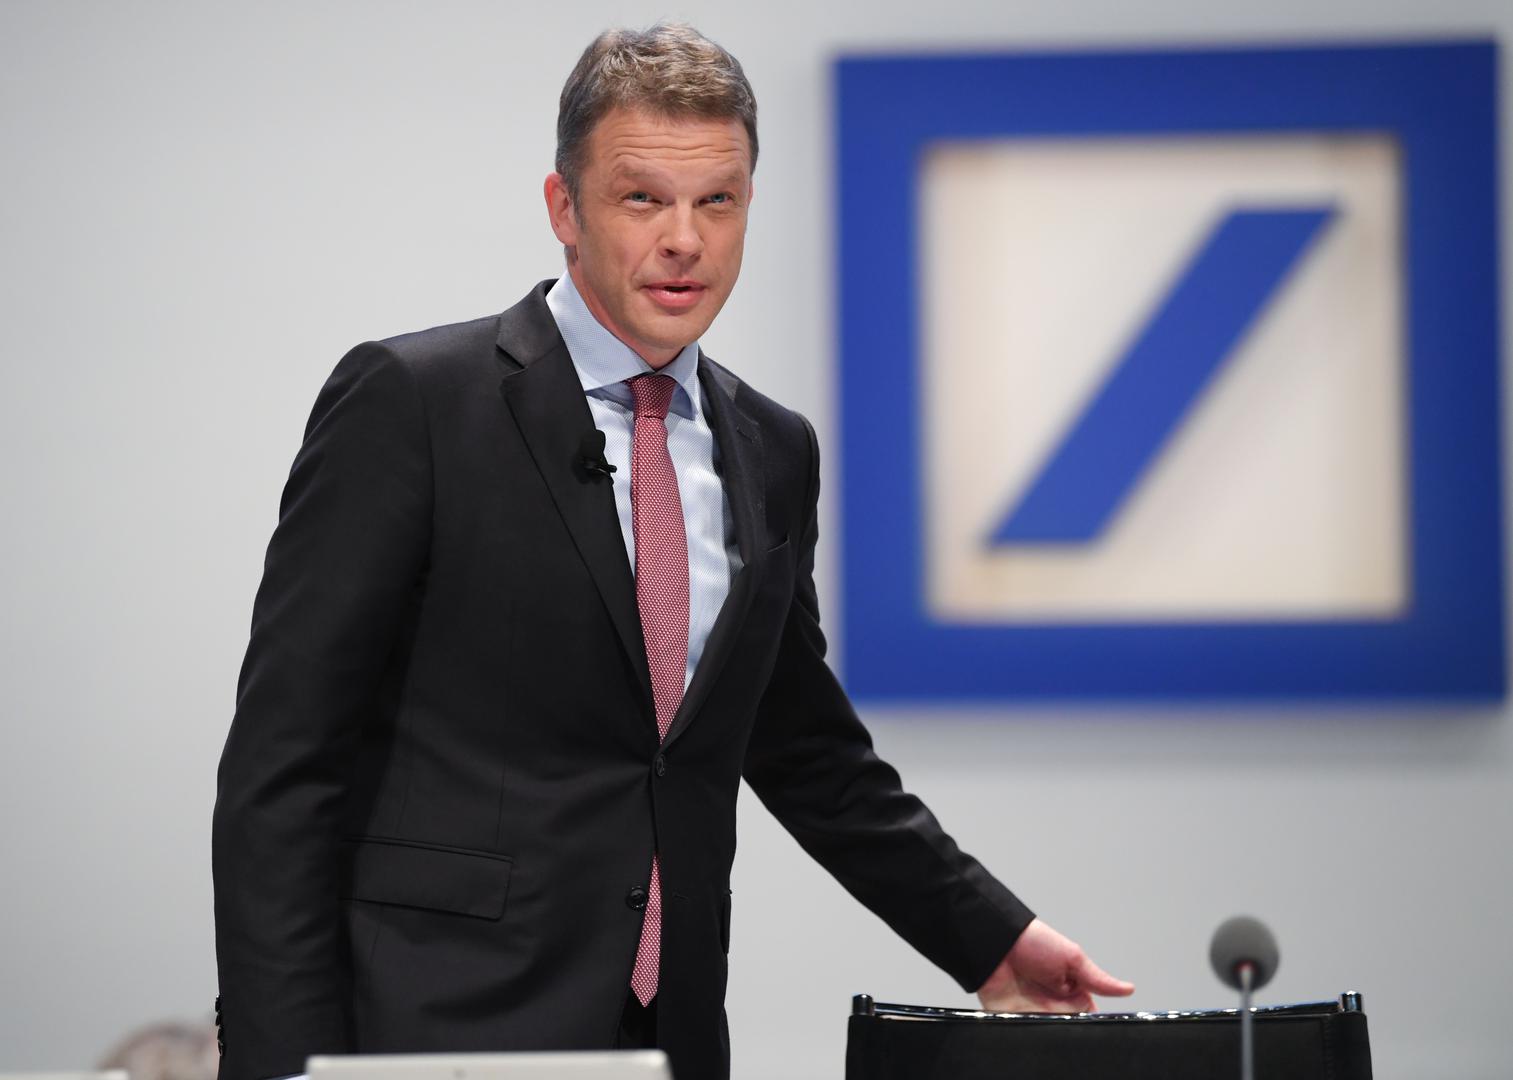 Christian Sewing glavni direktor Deutsche Bank radi na održivom profitabilnom poslovanju